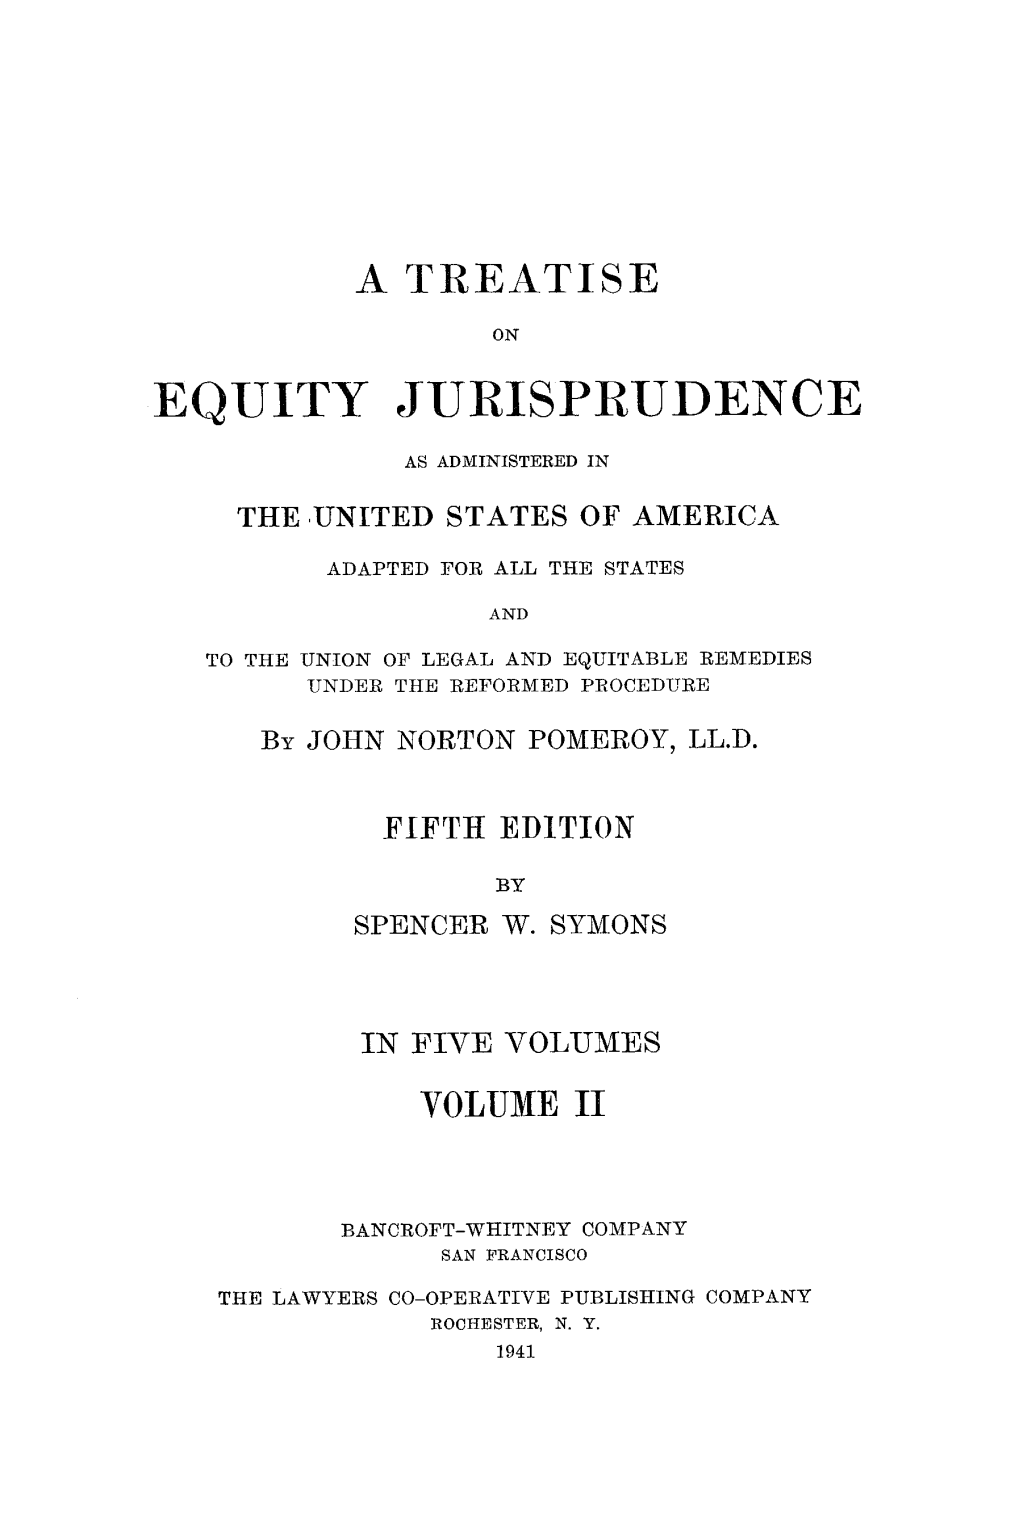 J. Pomeroy, a Treatise on Equity Jurisprudence §